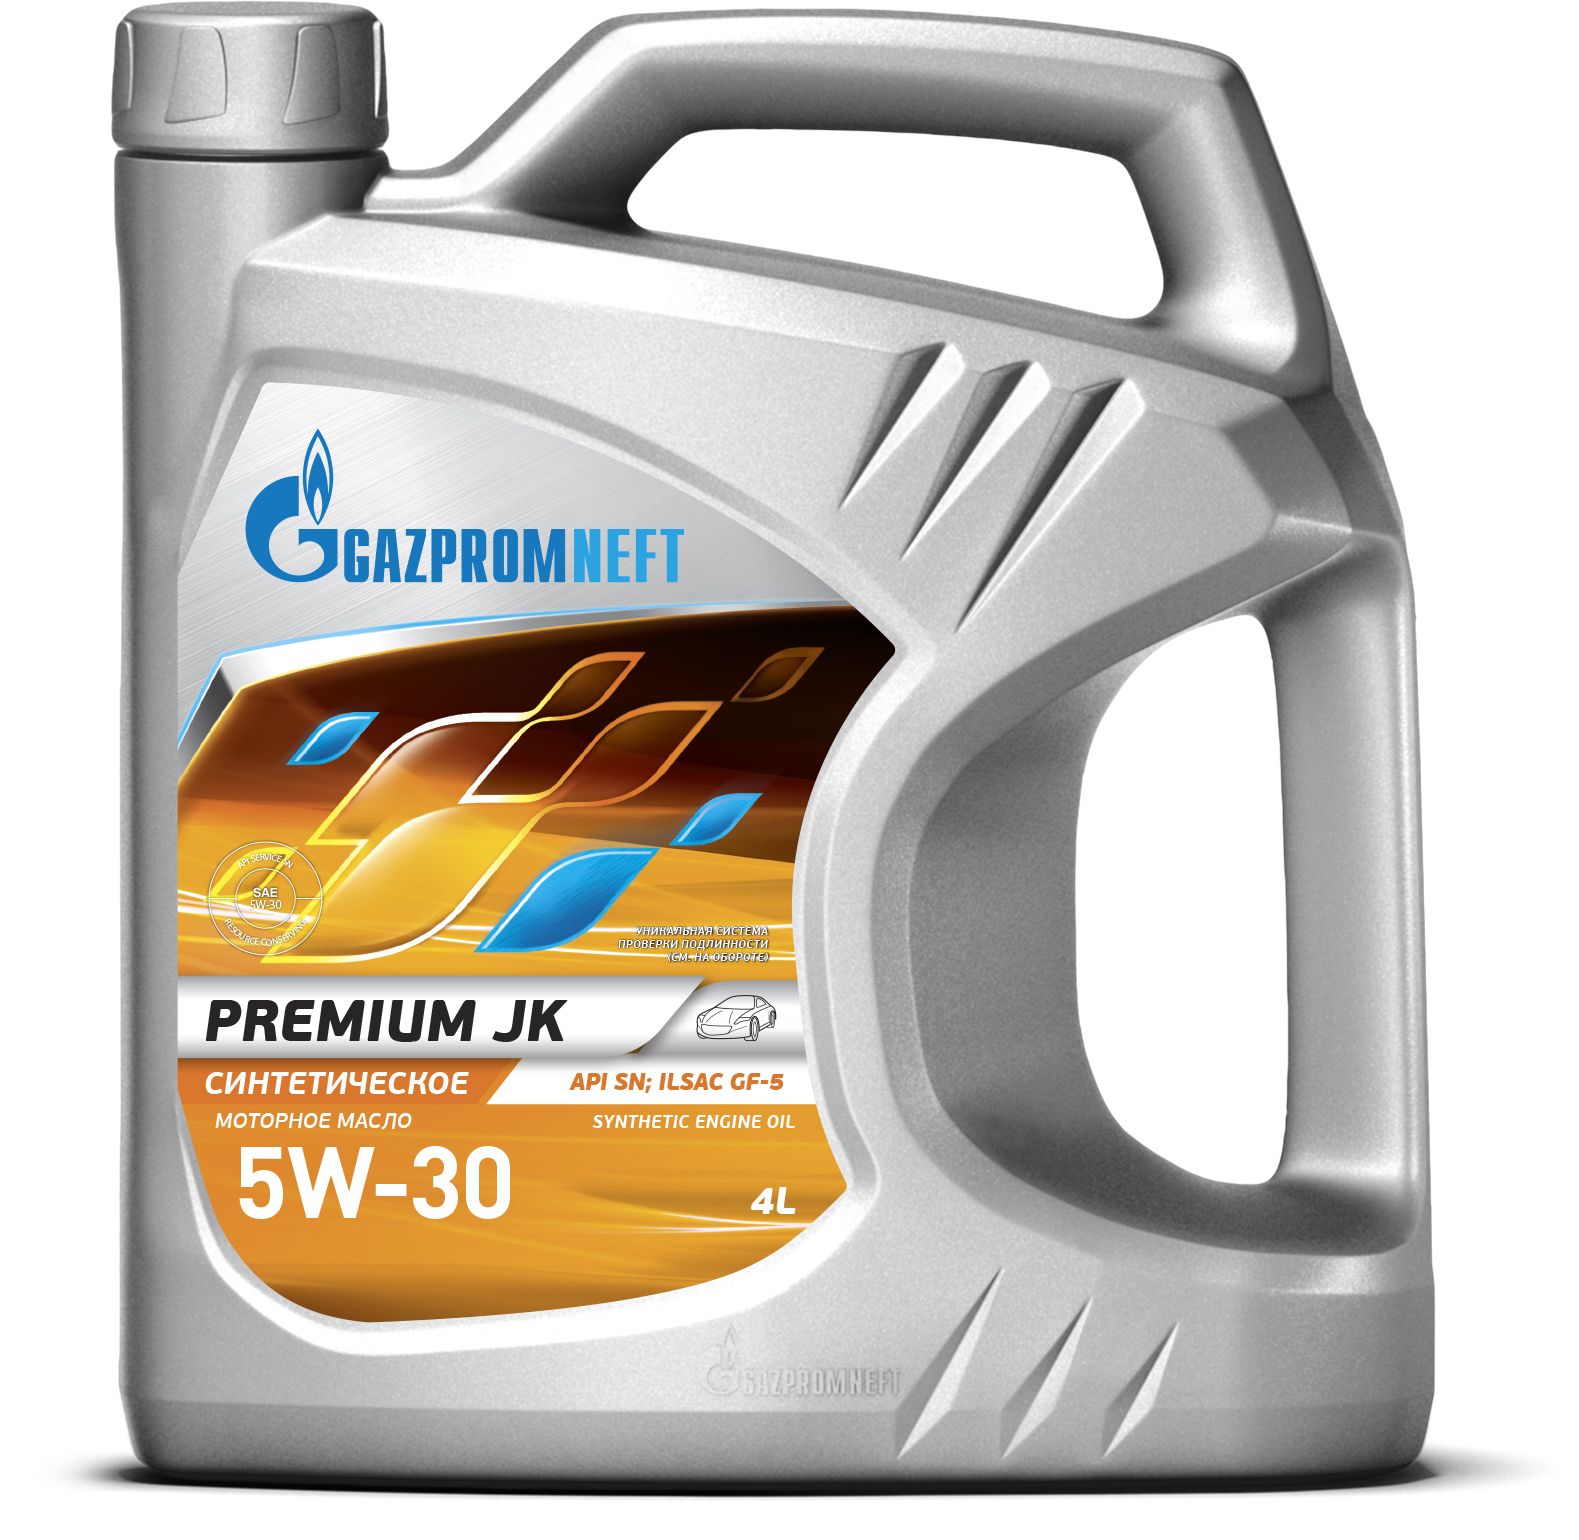 Gazpromneft Premium n 5w40 4л. Gazpromneft Premium JK 5w-30. Gazpromneft масло Premium l 10w-40 4л. Масло трансмиссионное газпромнефть gl 4